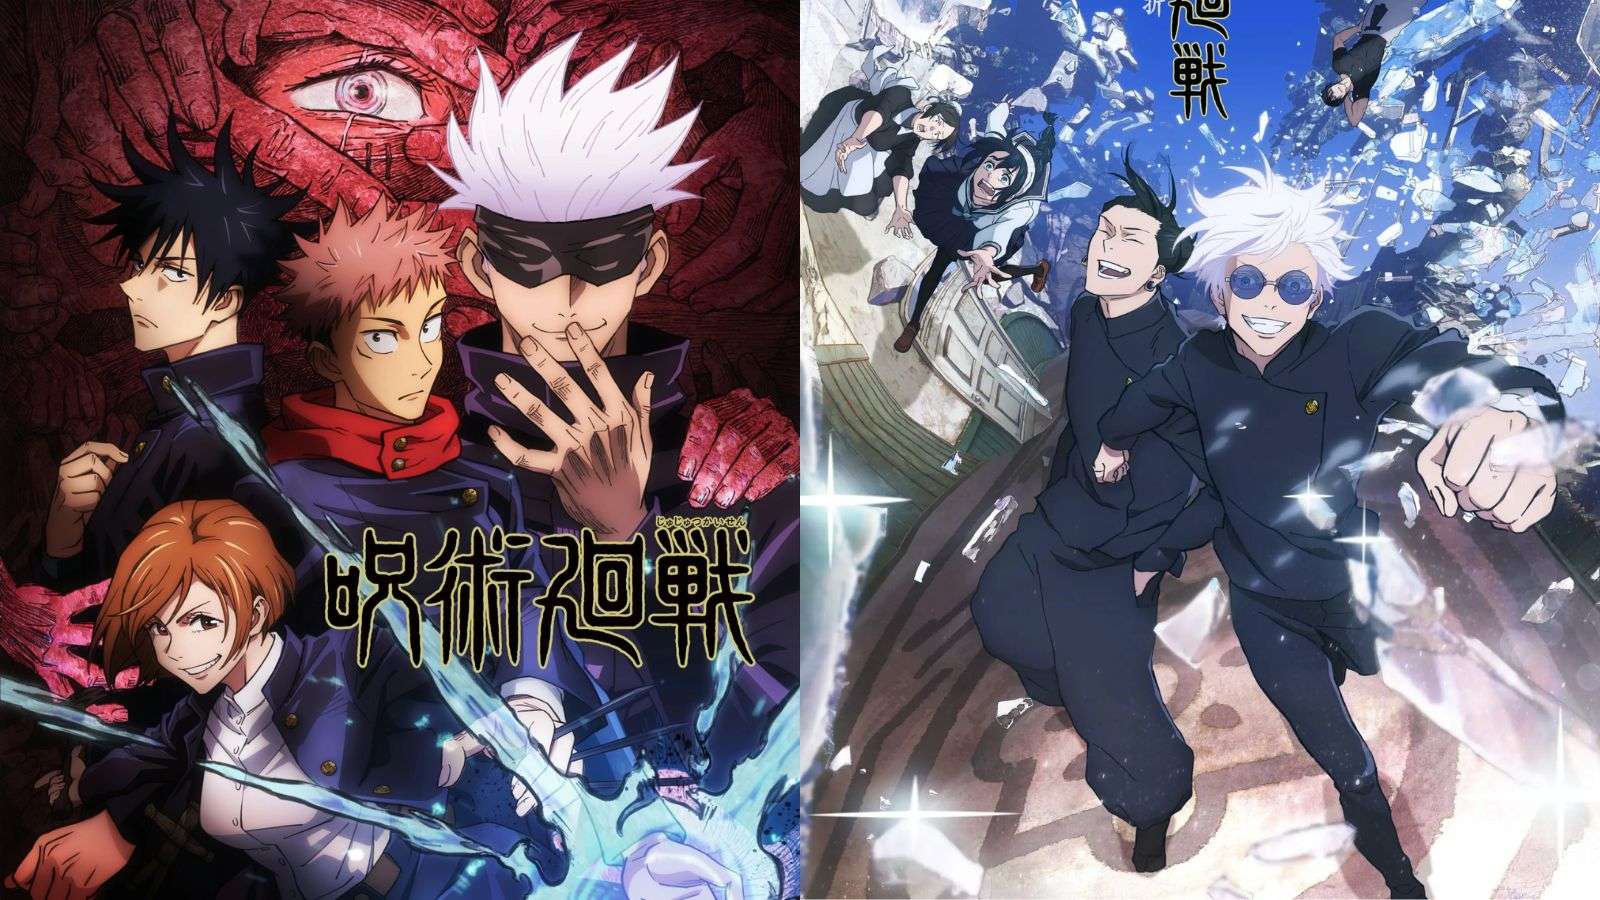 A comparison of art style between Jujutsu Kaisen season 1 and 2